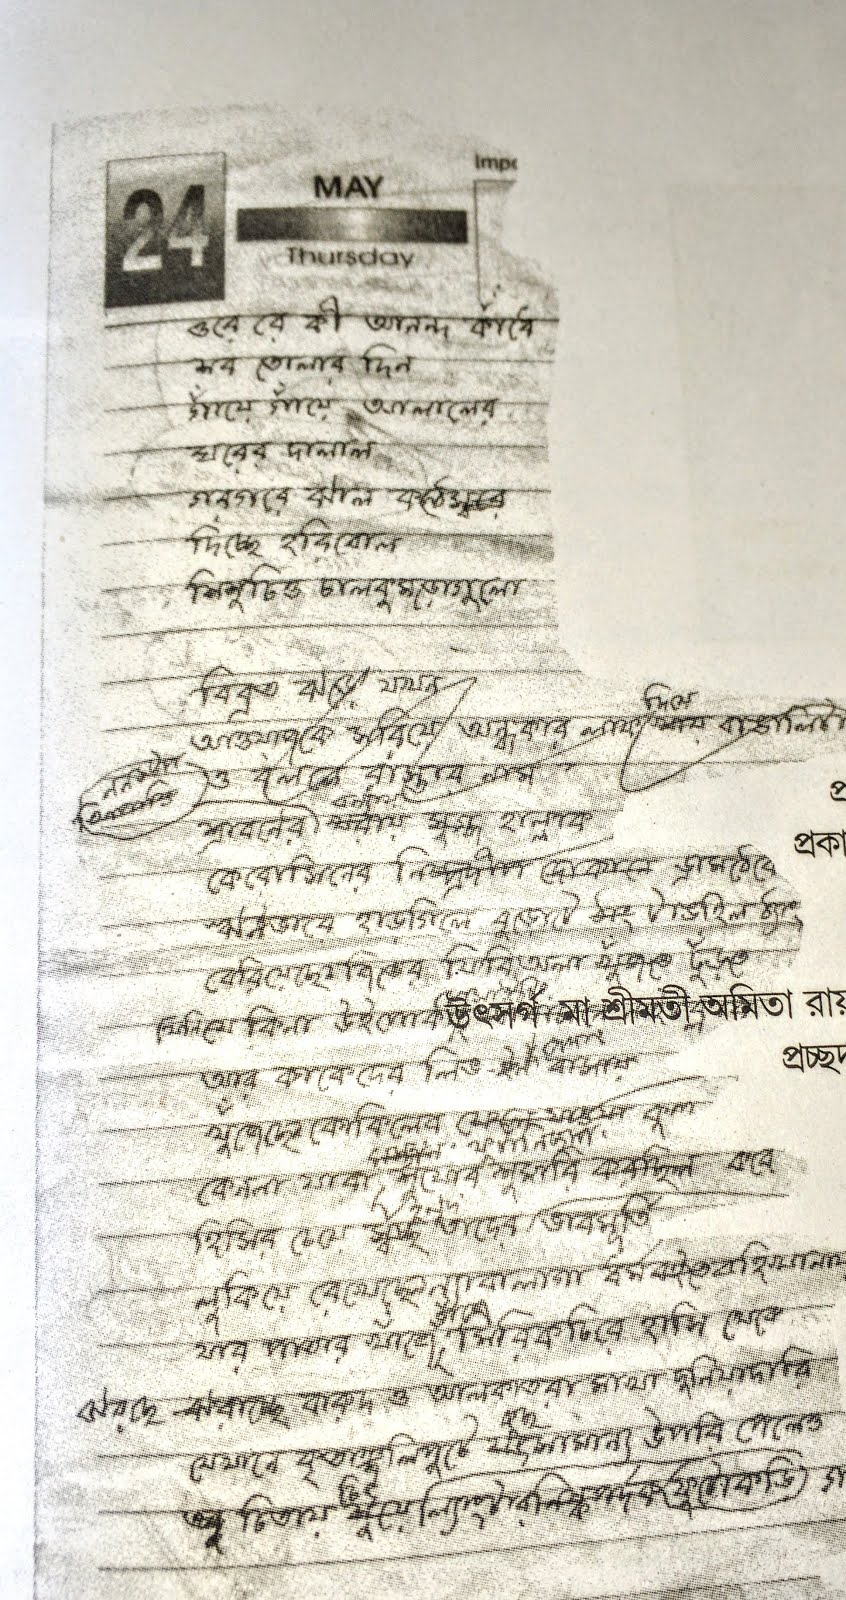 Malay Roychoudhury's manuscript